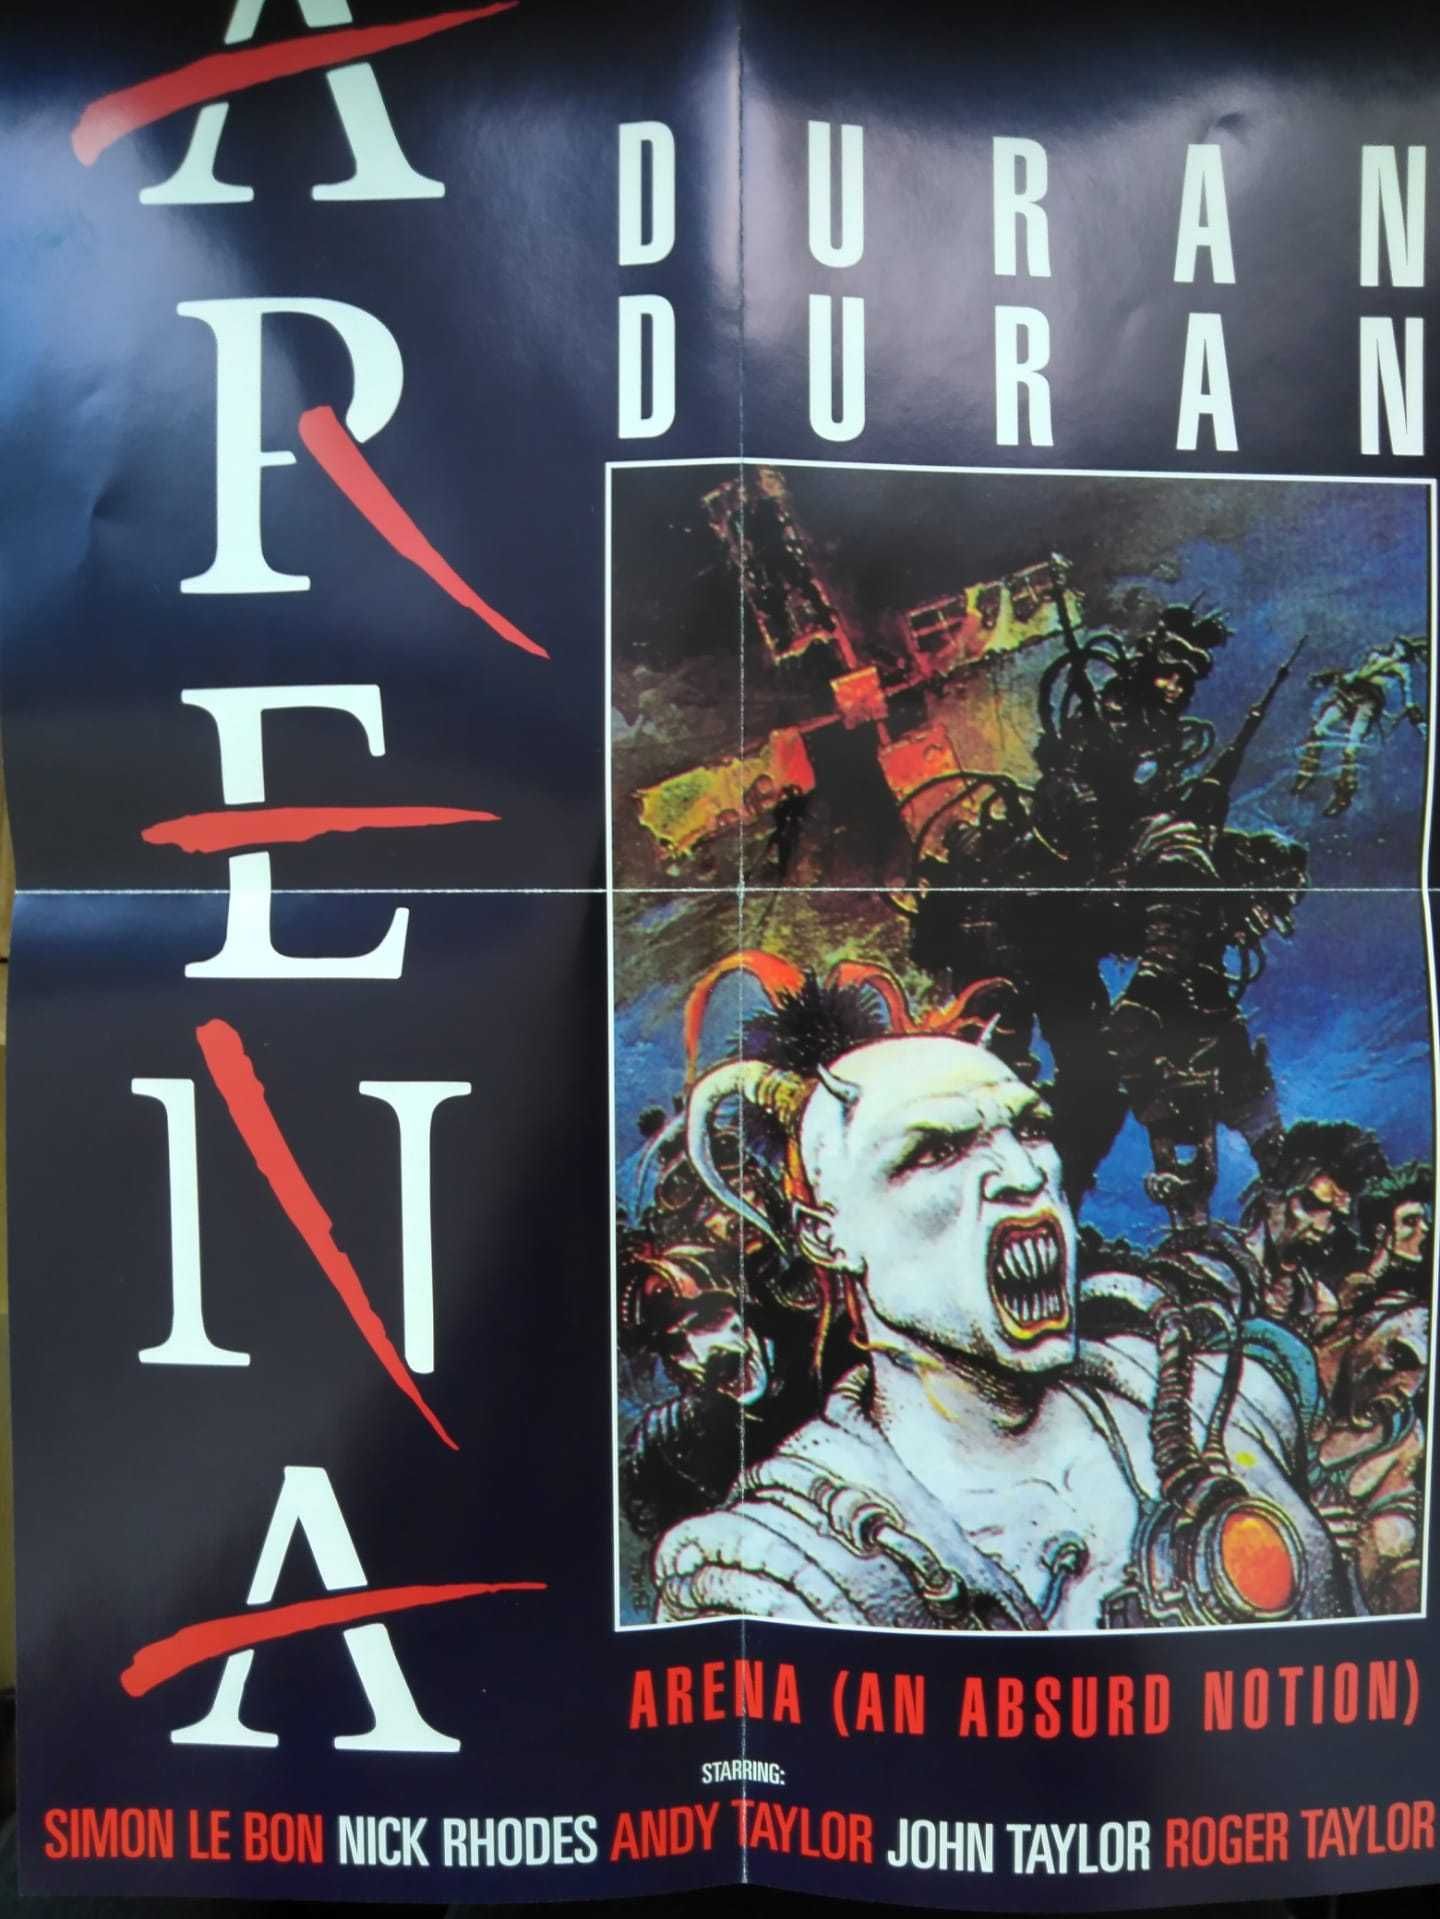 DVD Duran Duran "Arena (An absurd notion)". Muito raro.